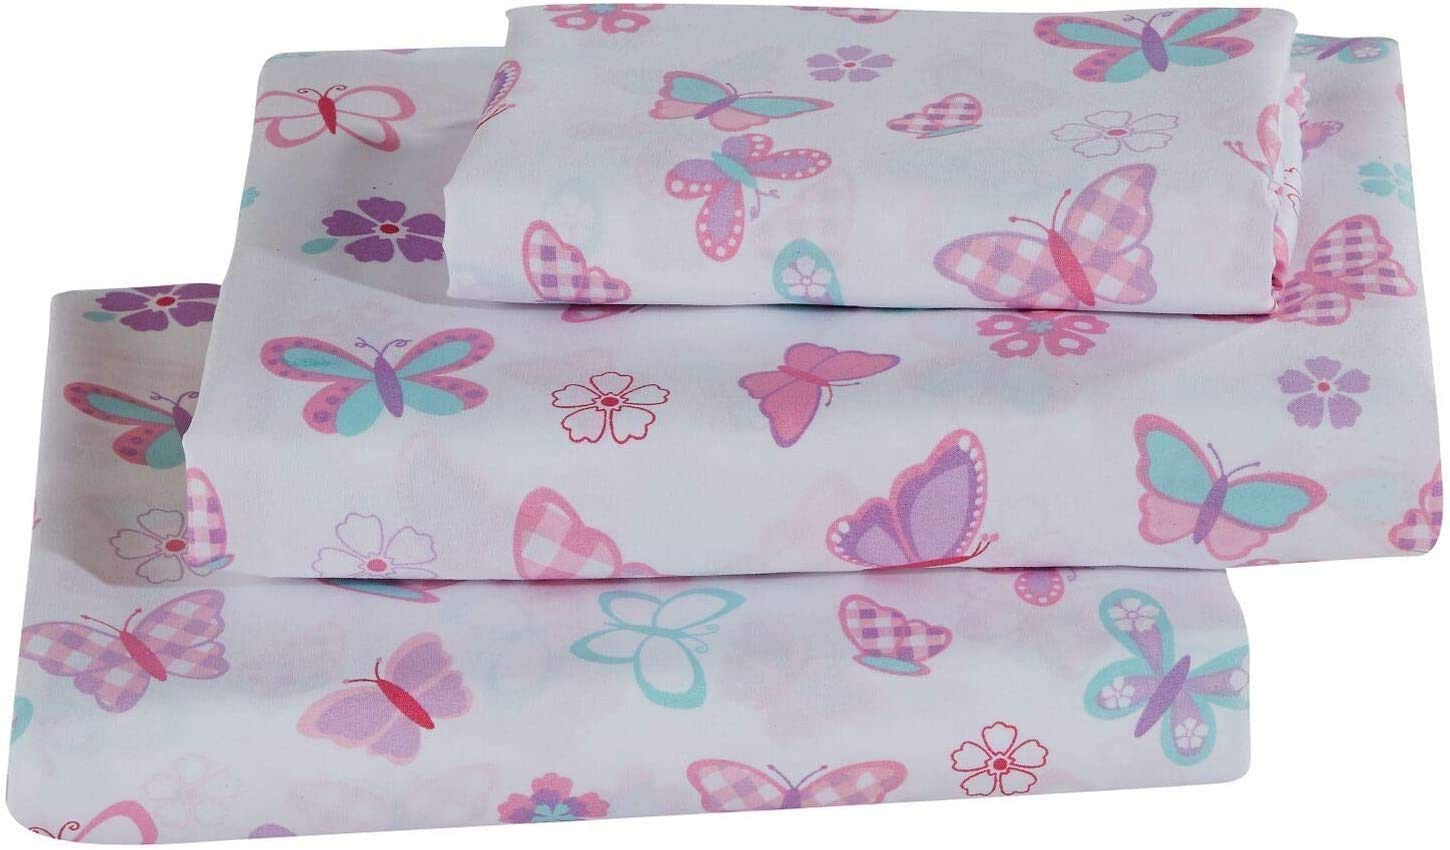 Home Collection Queen Size Comforter And Sheet Set Butterflies Birds Pink Blue Green New # Tree Butterfly